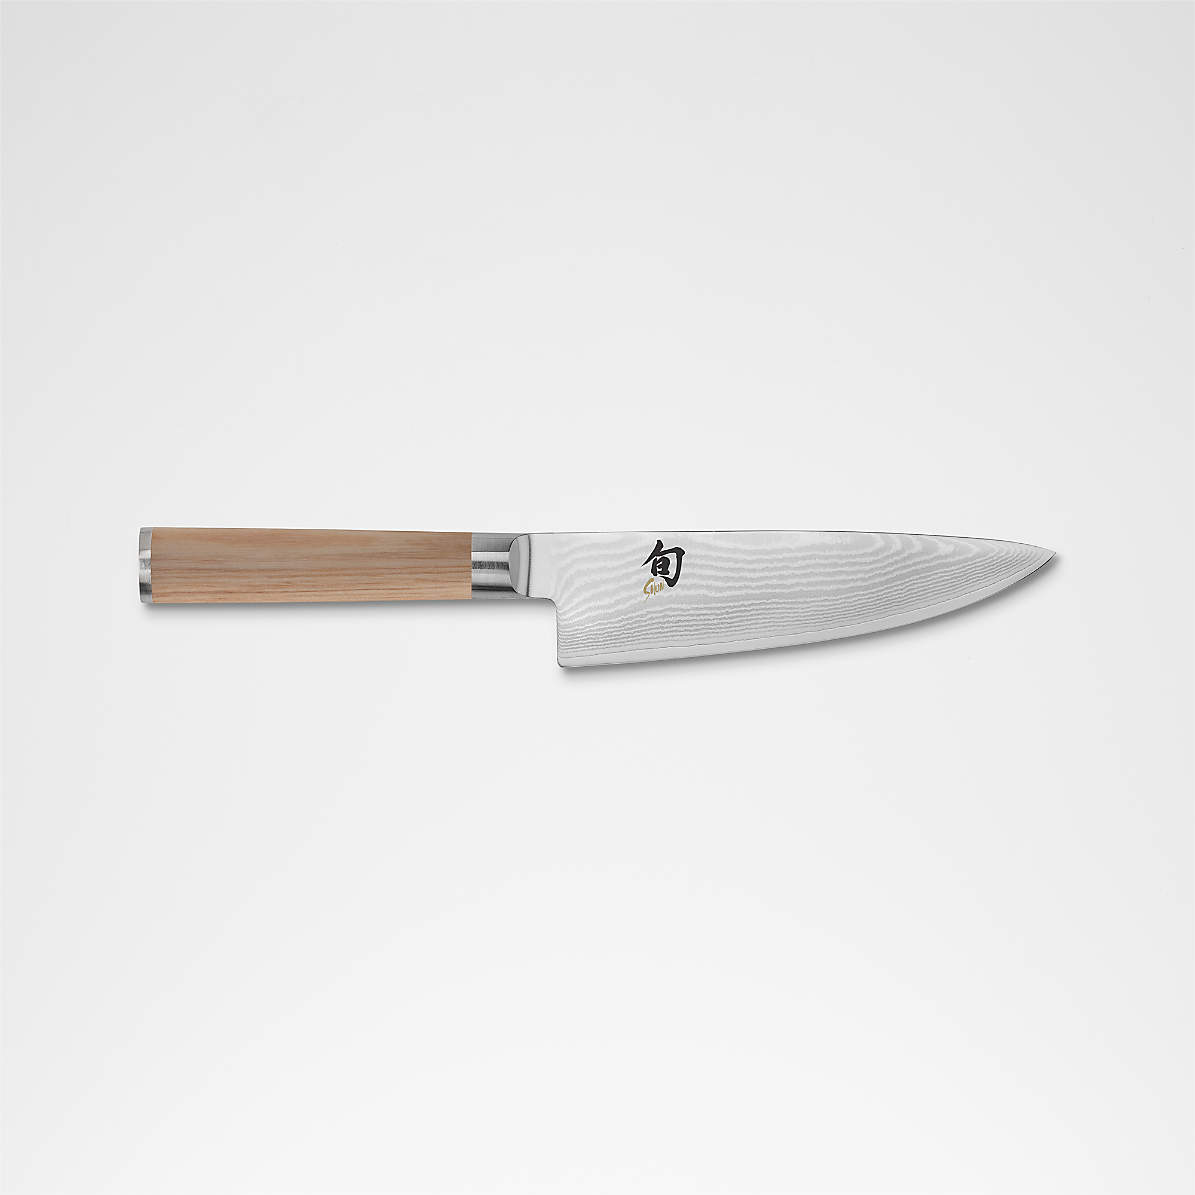 The Best Steak Knives, Shun Classic Blonde